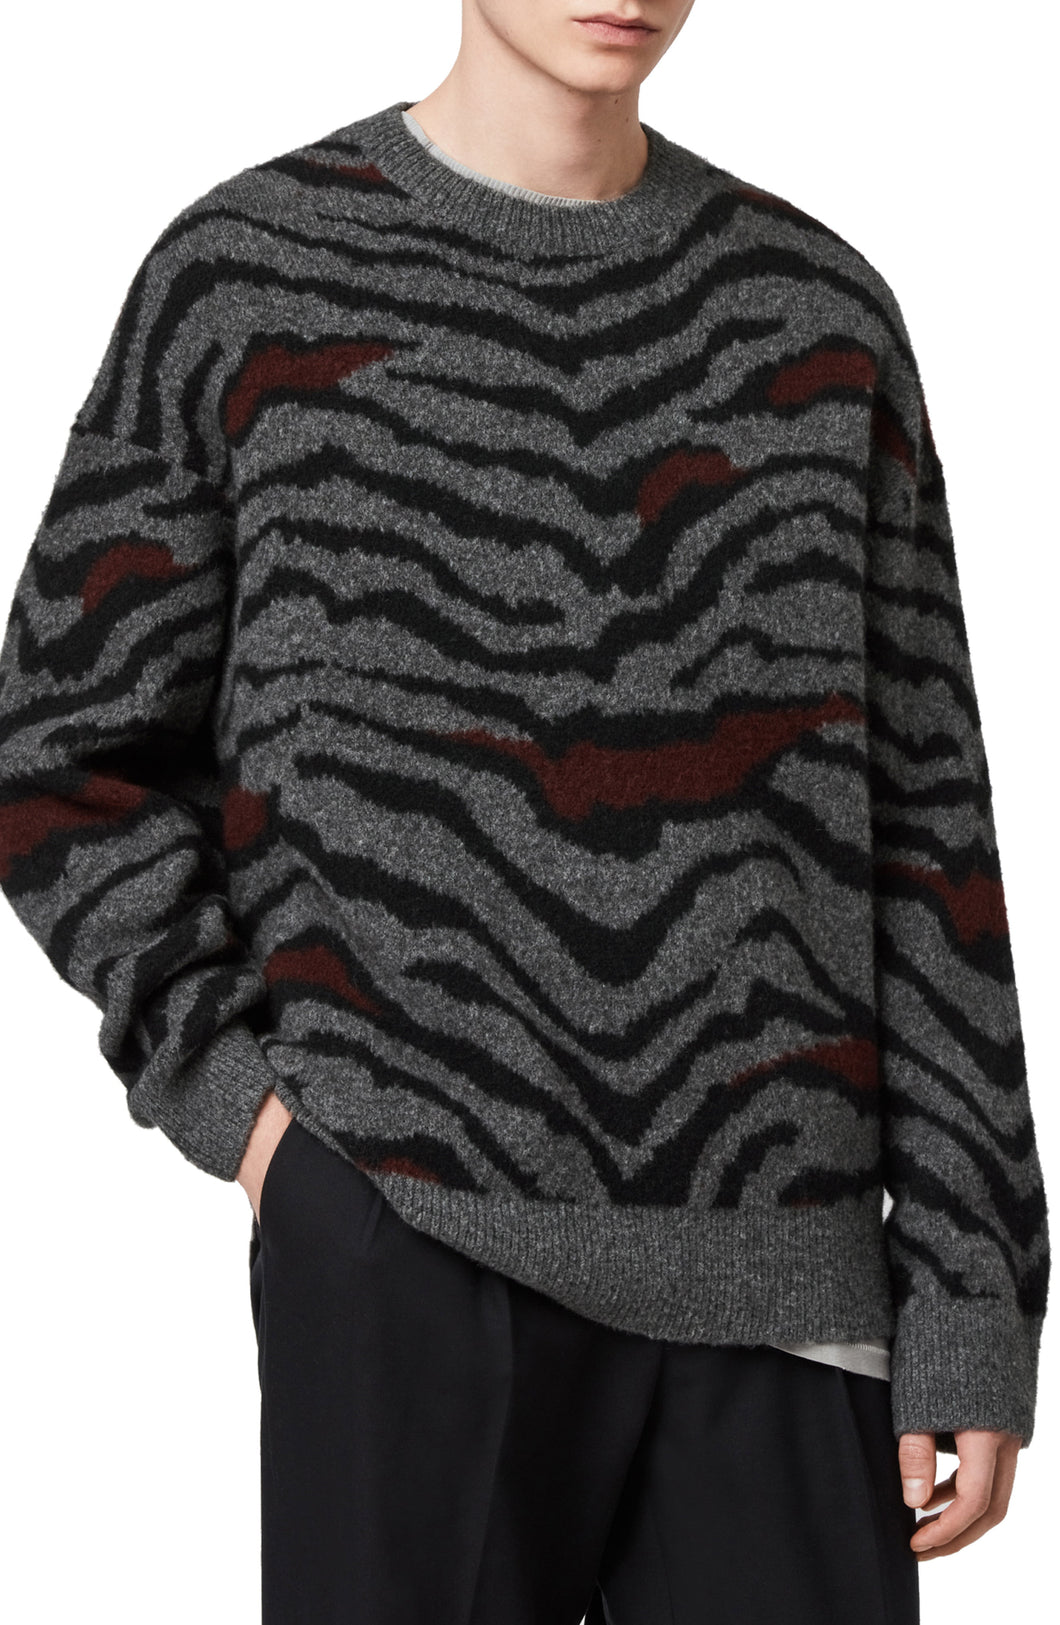 New - Men's Tora Crewneck Cheetah Print Sweater - Large